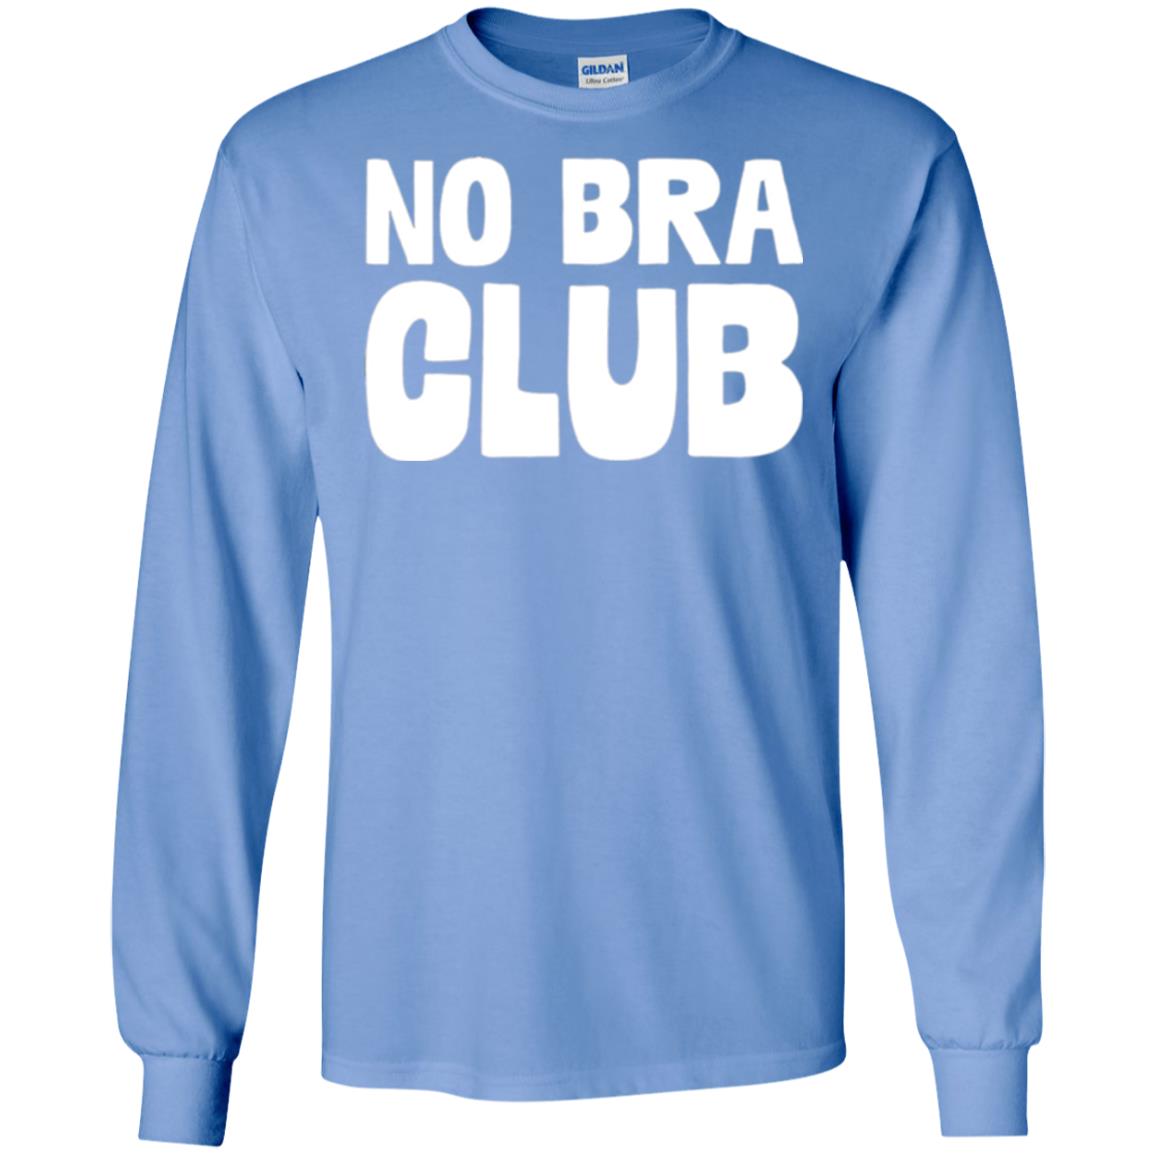 No Bra Club. Funny I Hate Bras Saying. Mint Green